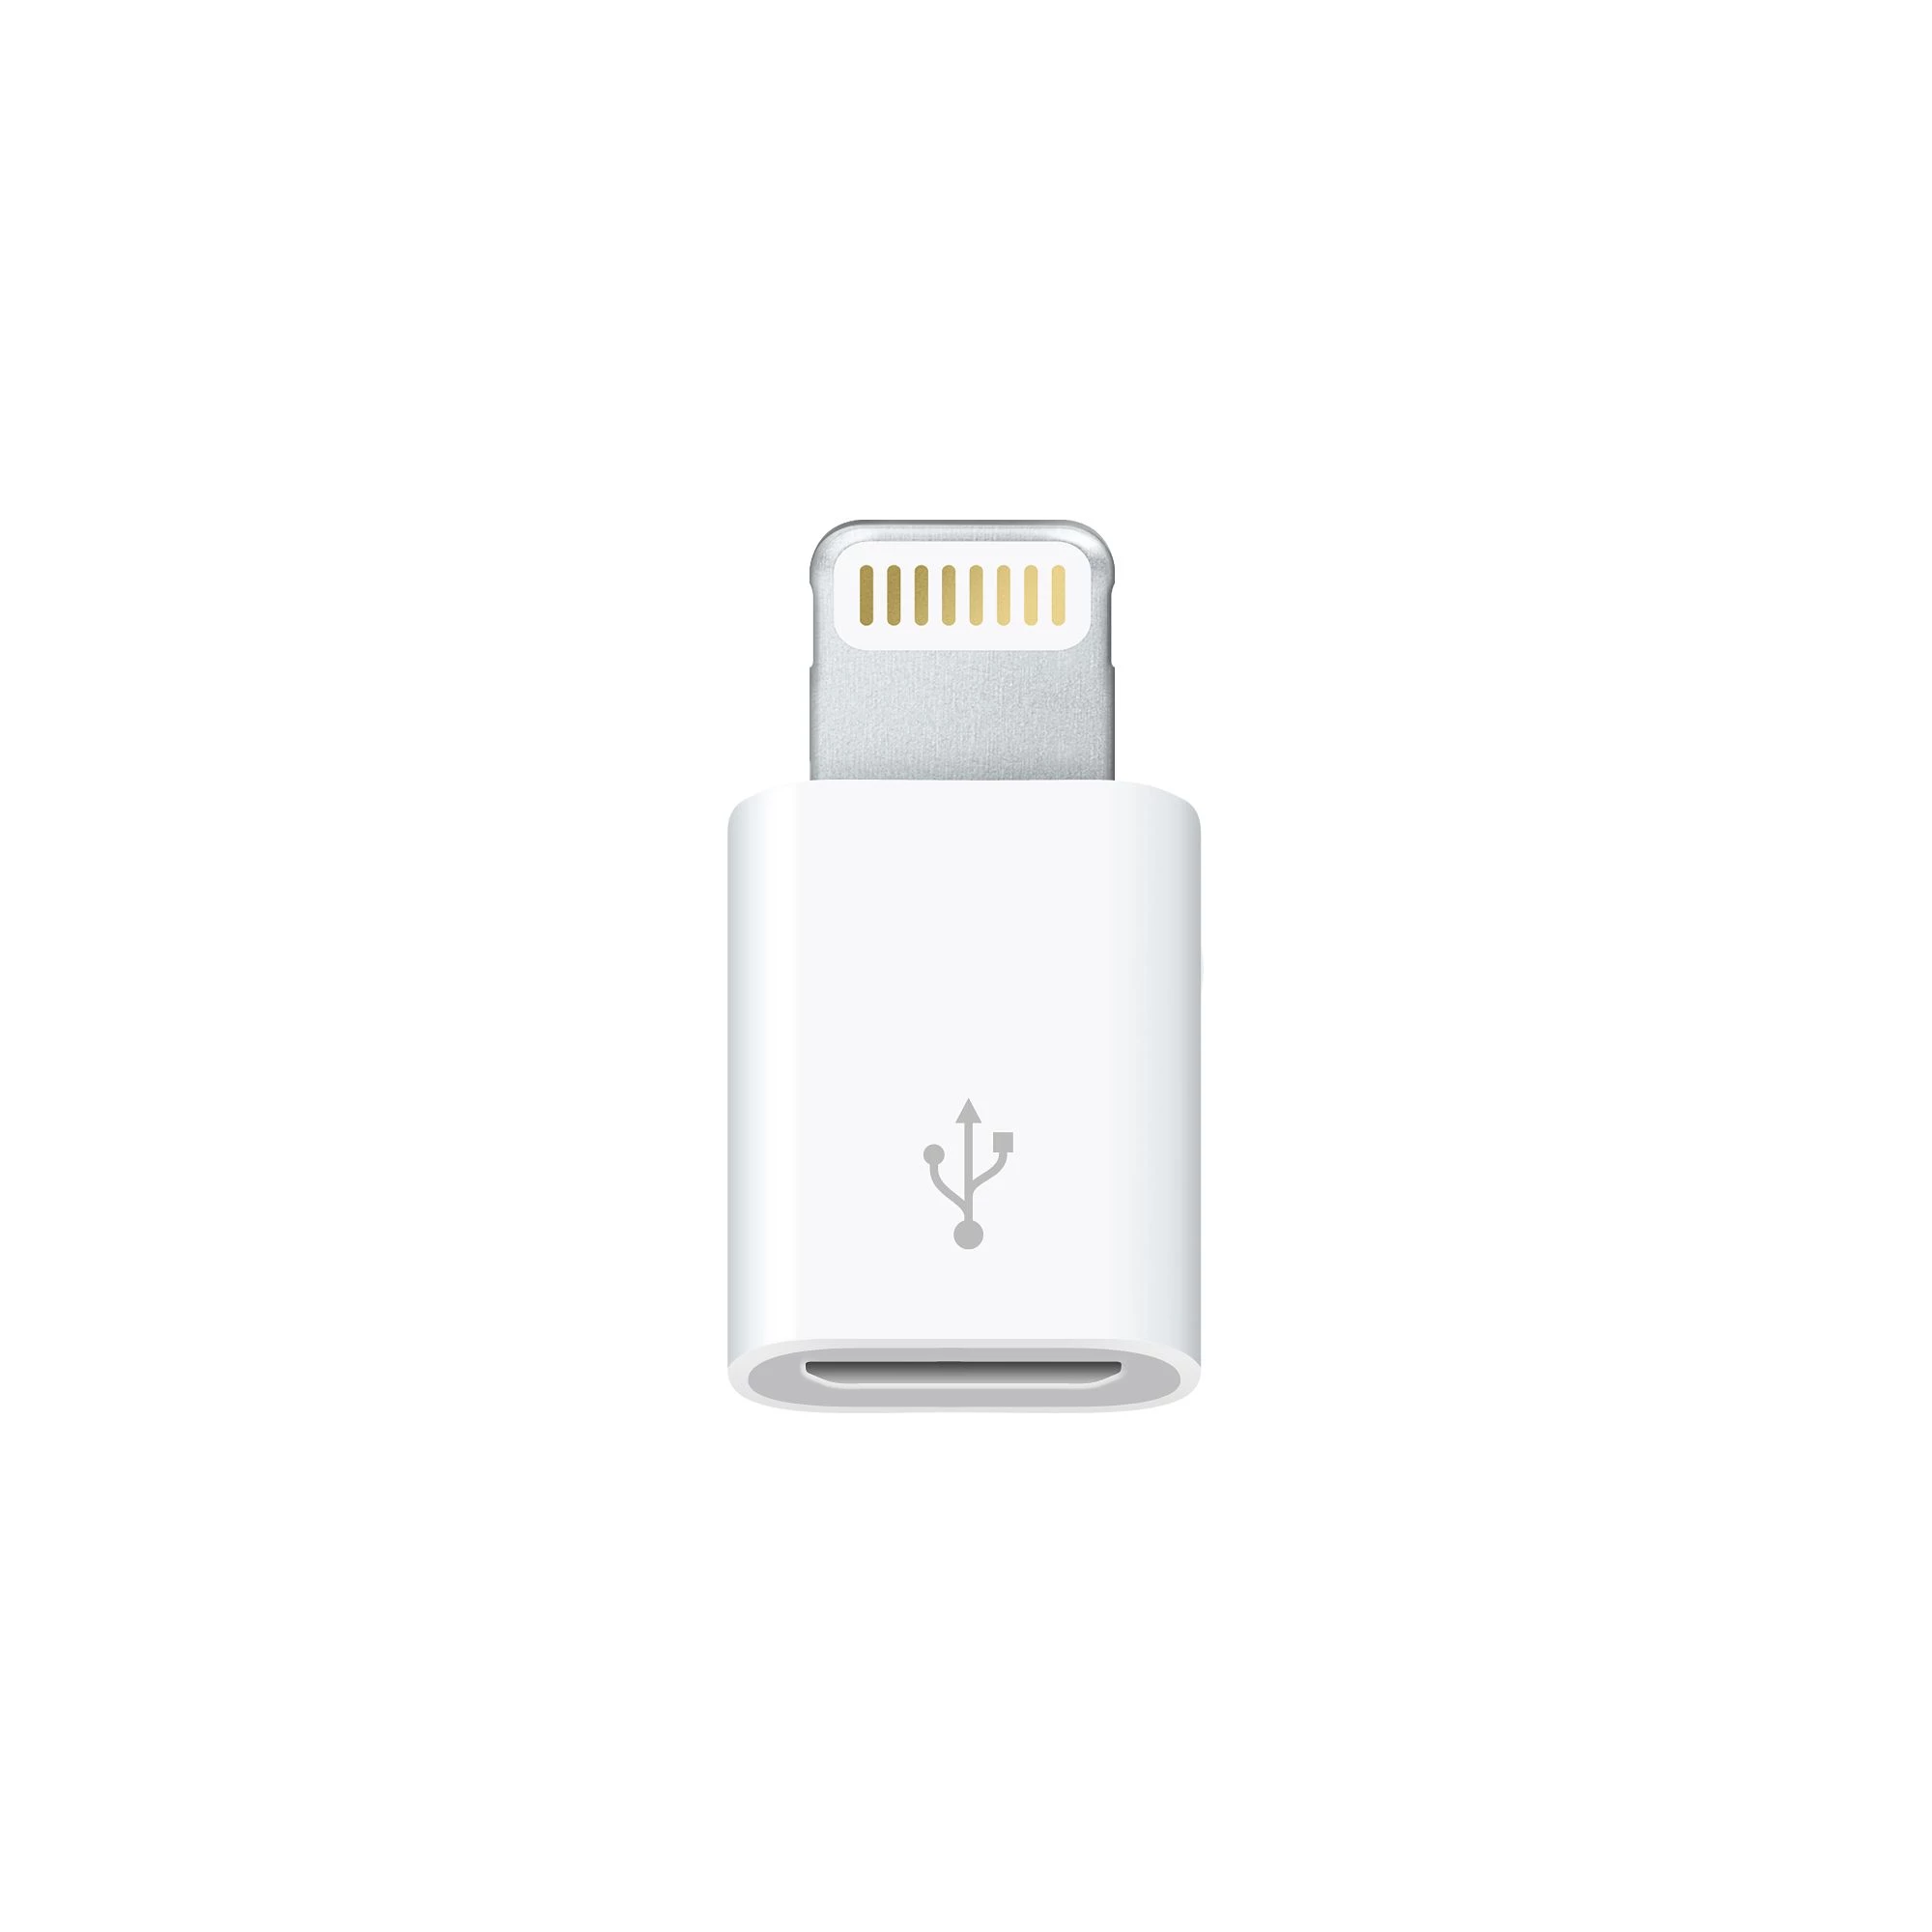 Apple Lightning to Micro USB Adapter (MD820)